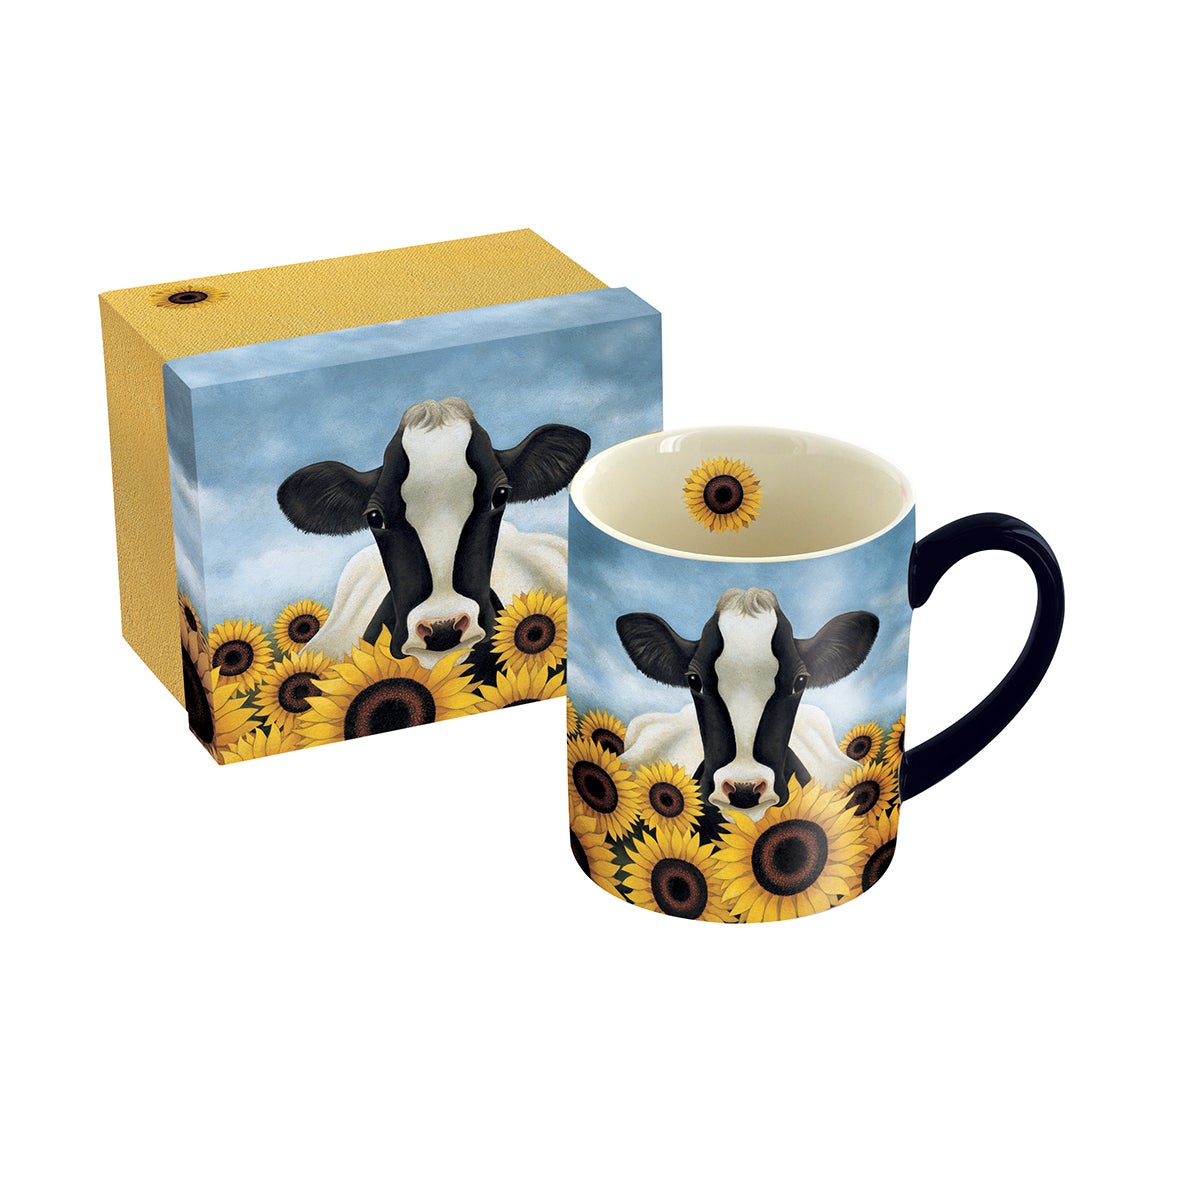 12 oz. Stoneware Travel Mug — Appalachian Coffee Company